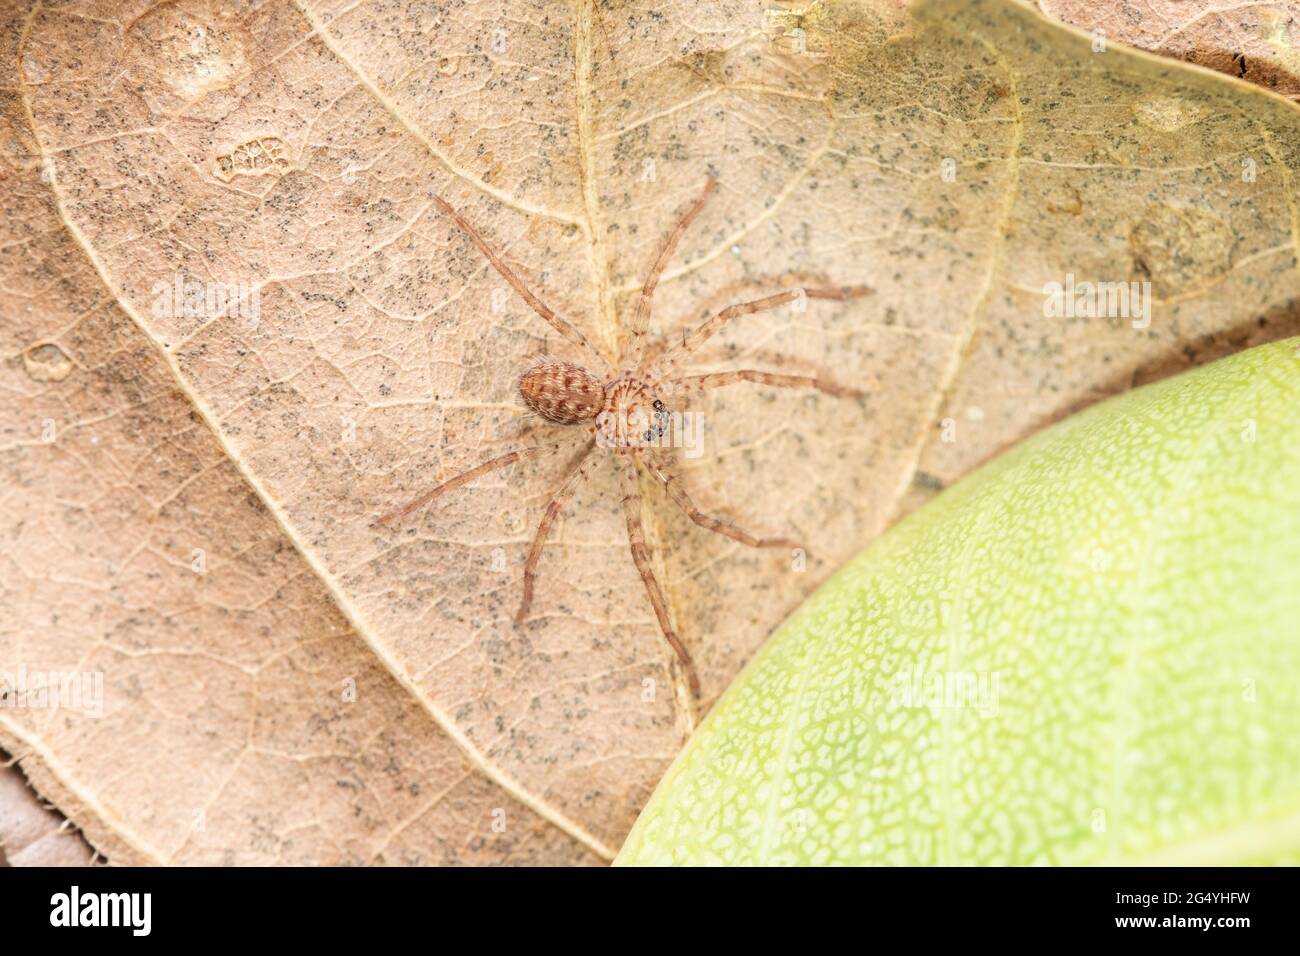 Spiderling secondo instar Huntsman ragno, Heteropoda venatoria, Satara, Maharashtra, India Foto Stock